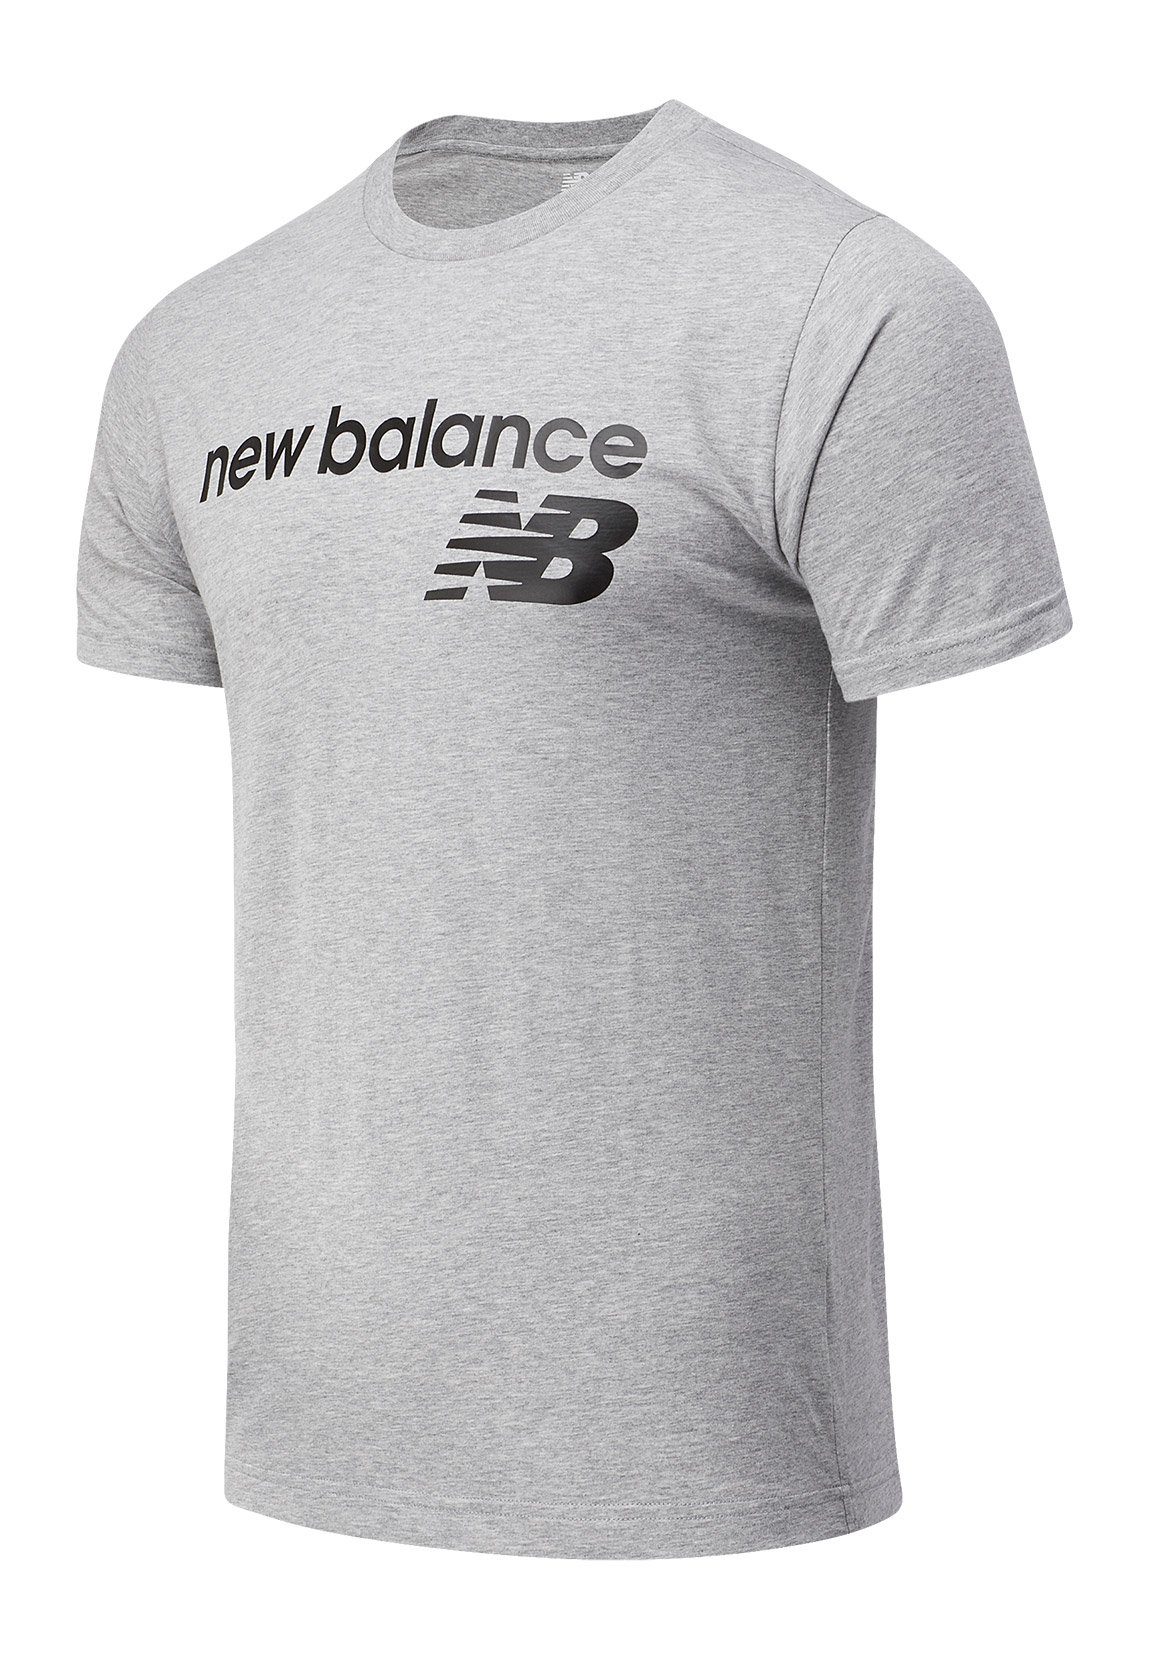 Athletic AG ATHLGREY TEE CORE Balance T-Shirt MT03905 T-Shirt CLASSIC Grey Balance Gau LOGO New New